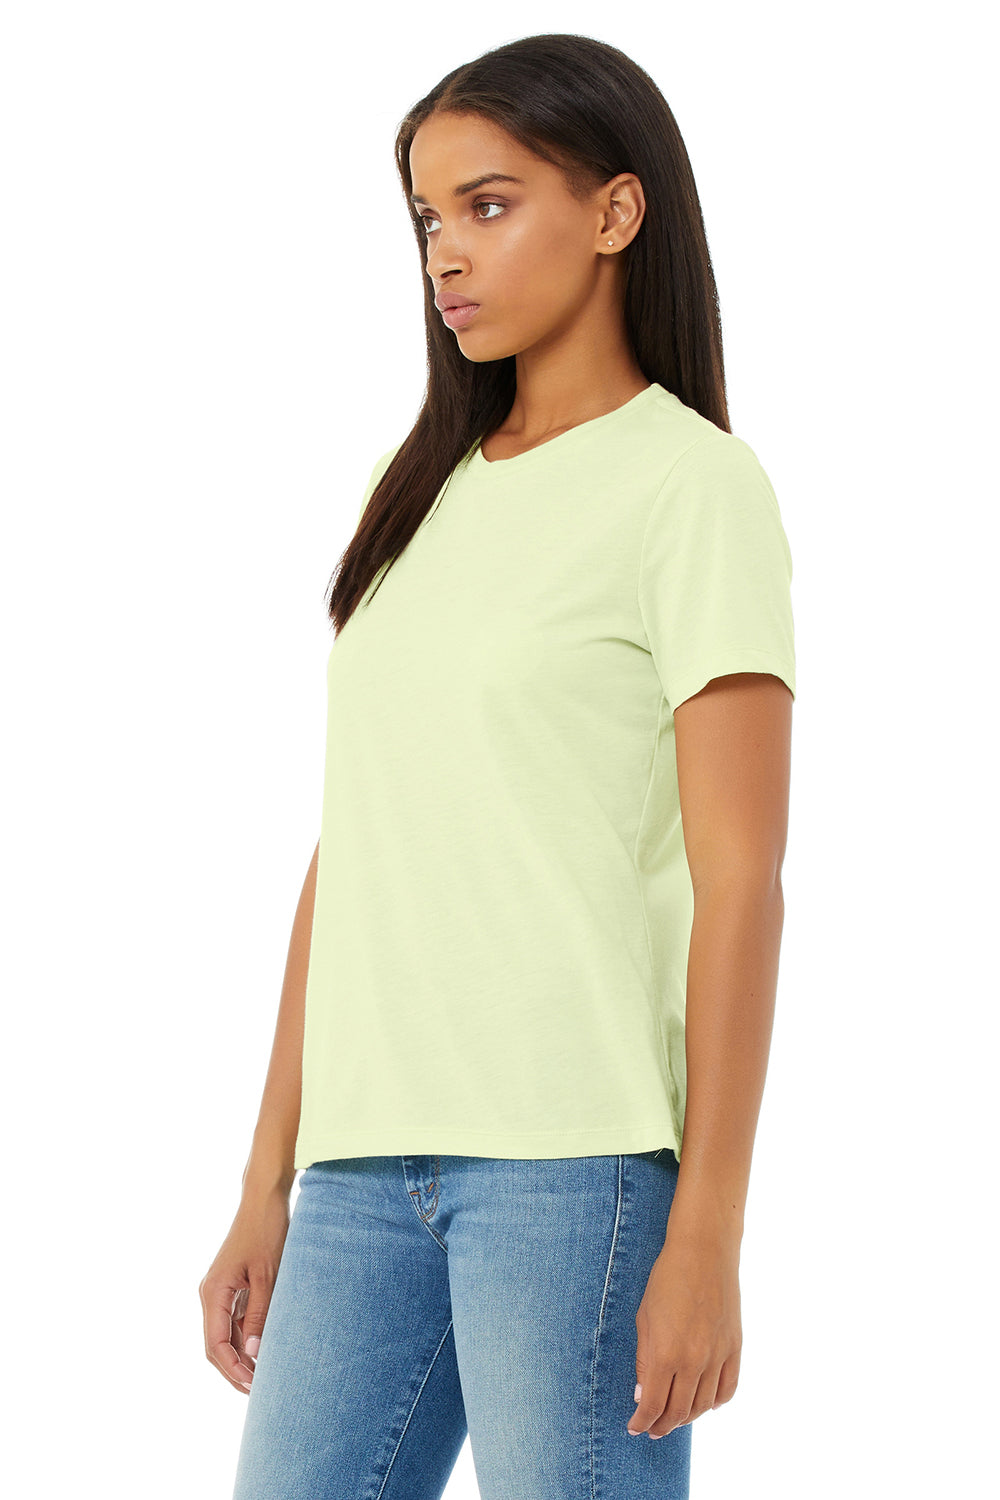 Bella + Canvas BC6413 Womens Short Sleeve Crewneck T-Shirt Spring Green Model 3Q